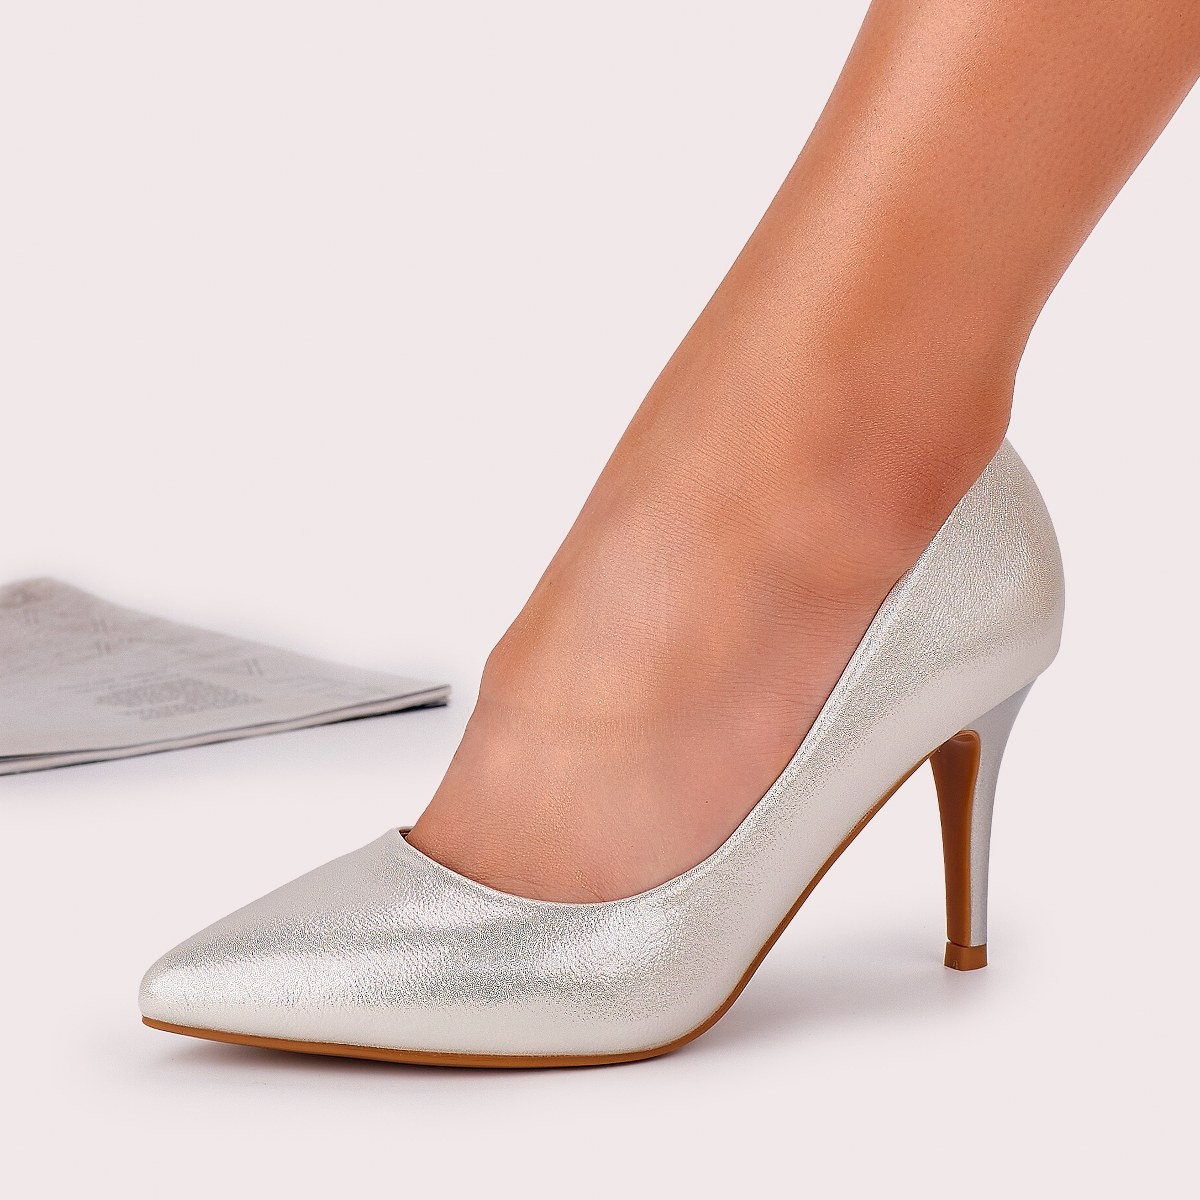 Pantofi dama argintii cu toc kirstie